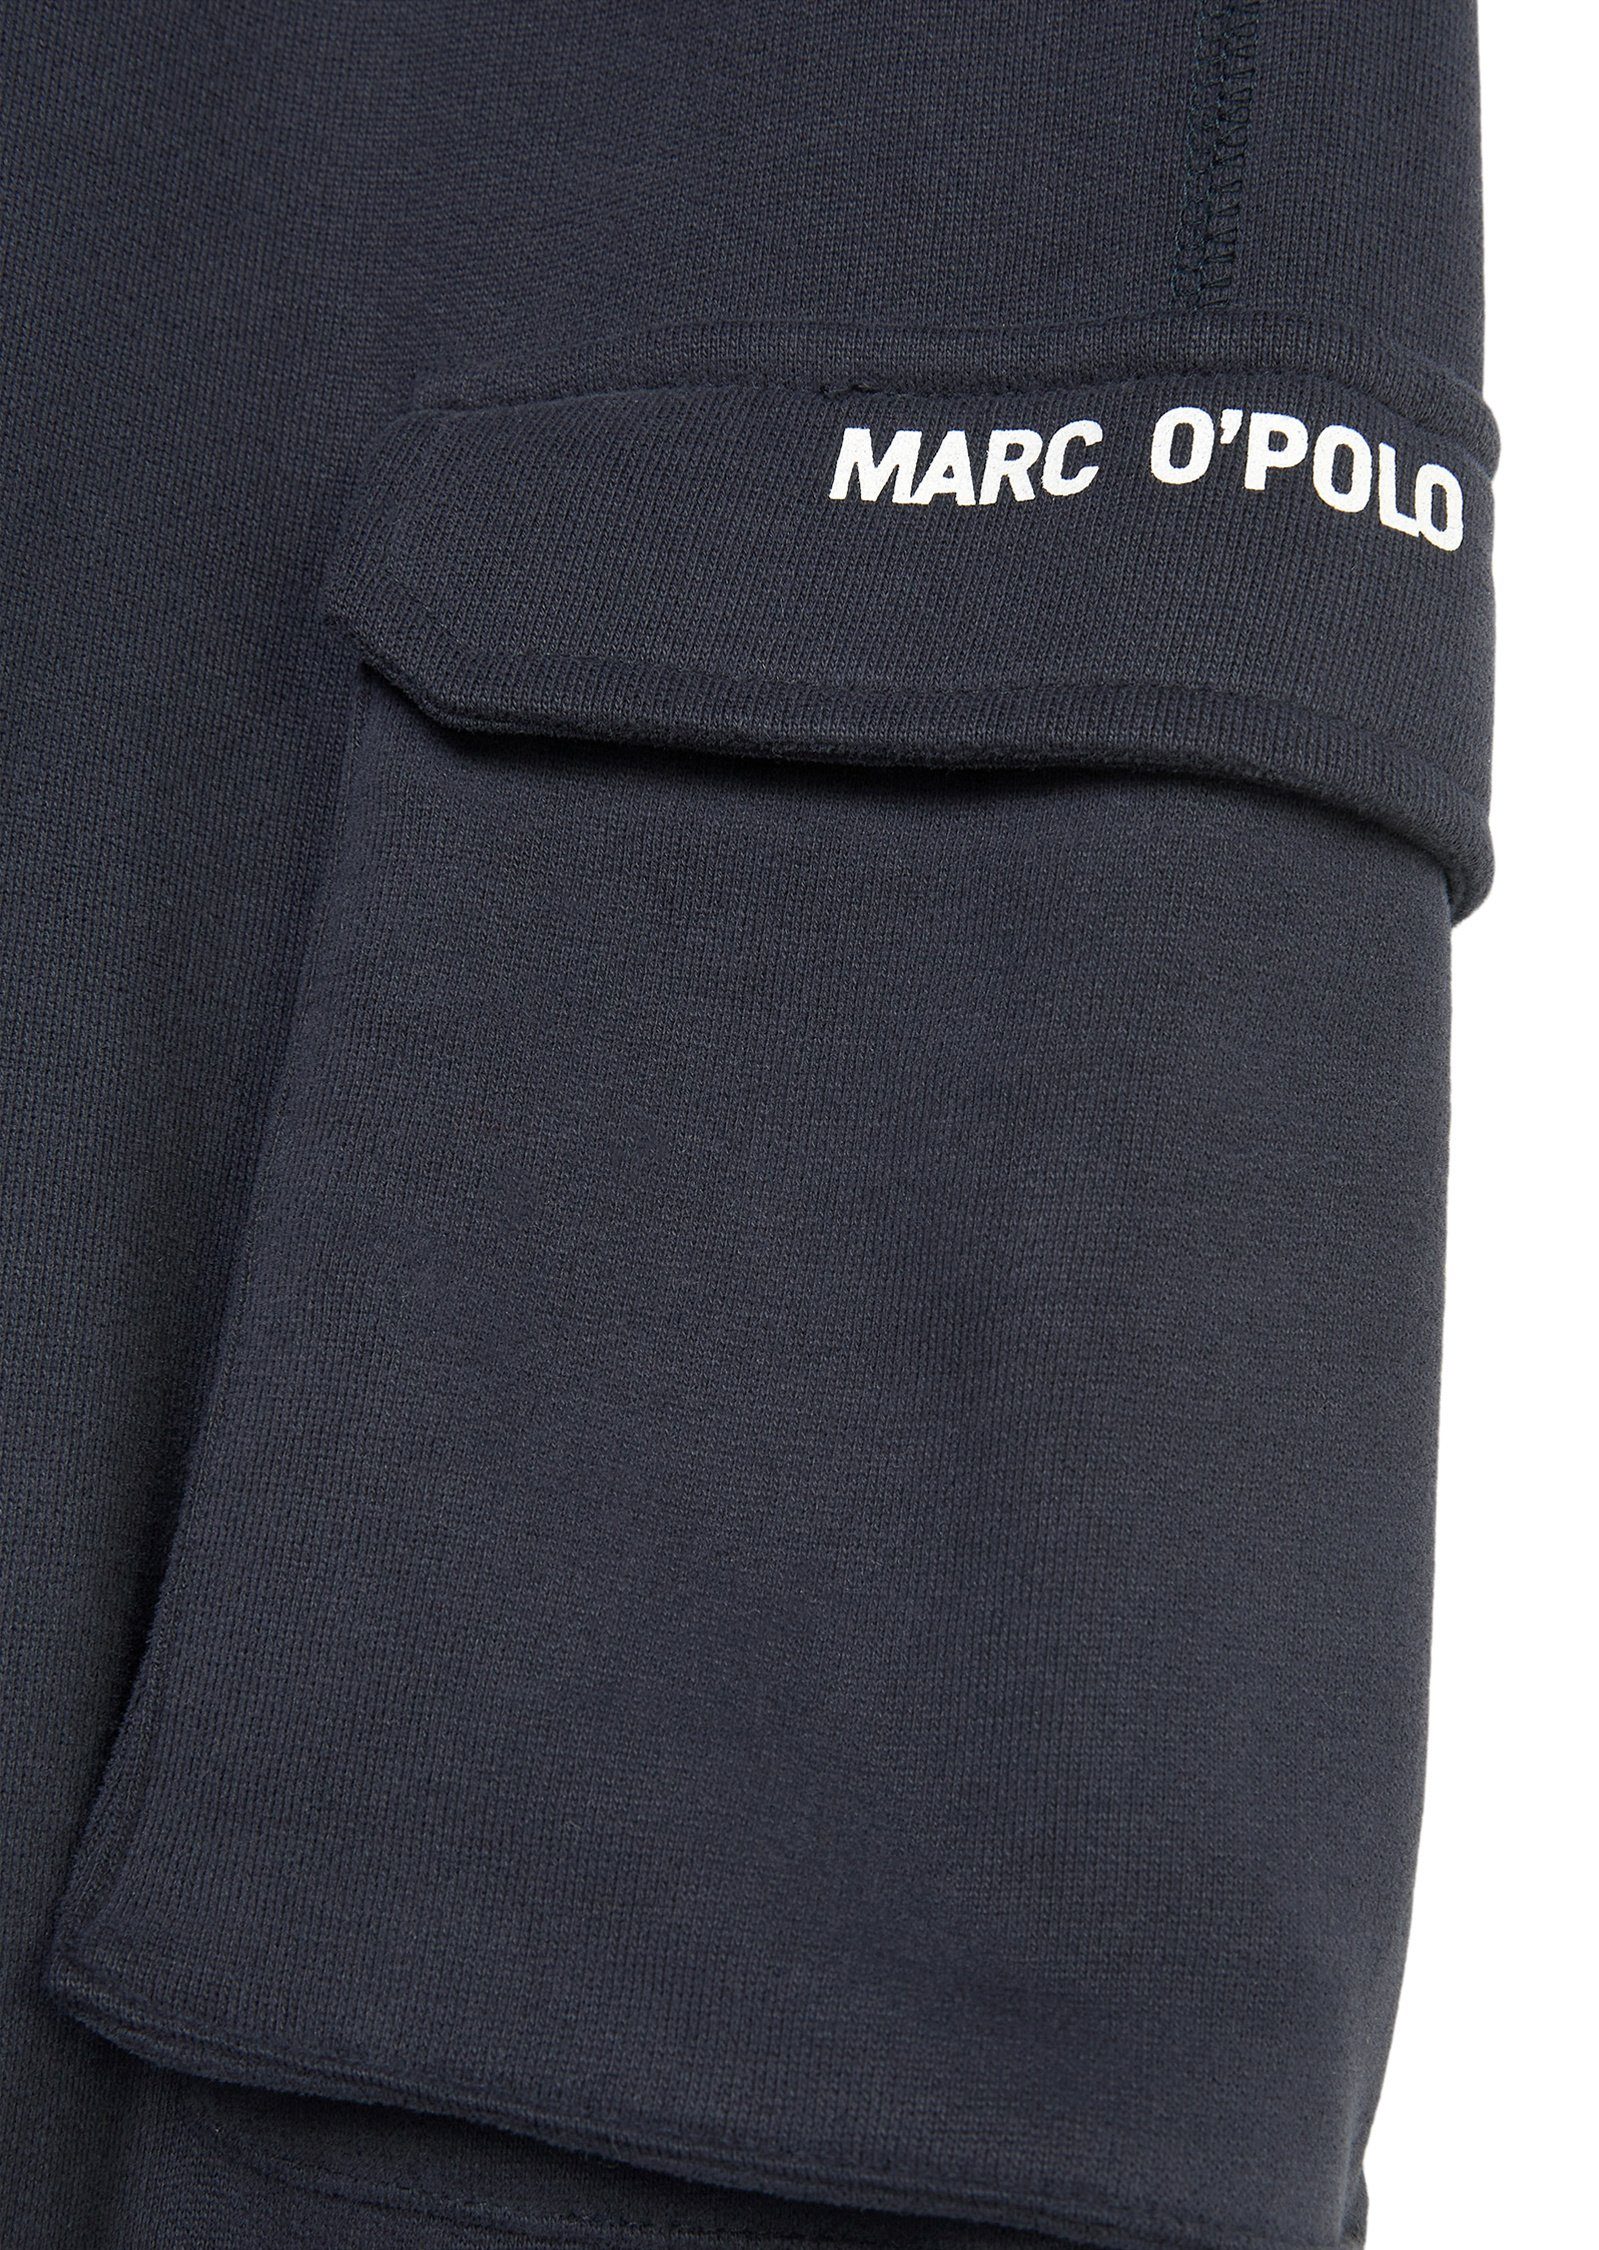 O'Polo Marc Chinohose Bio-Baumwolle blau aus